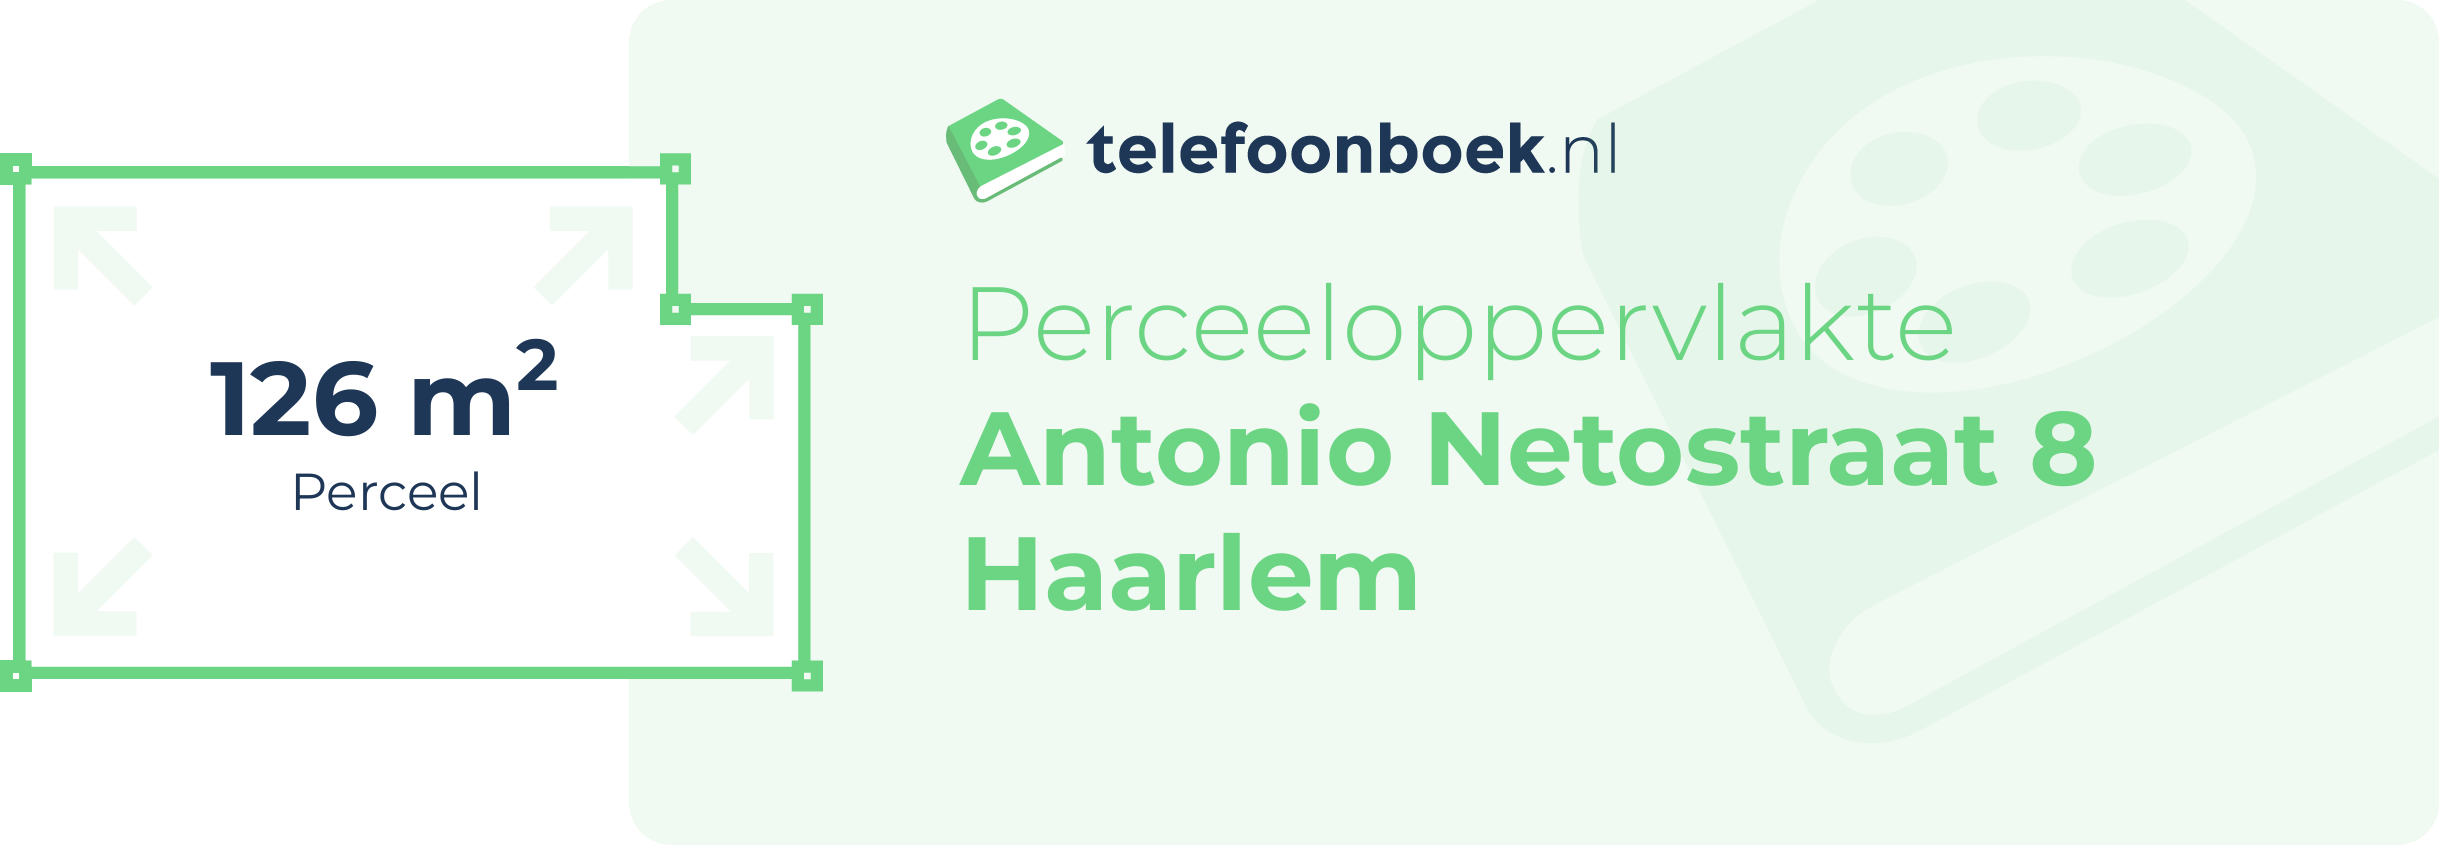 Perceeloppervlakte Antonio Netostraat 8 Haarlem